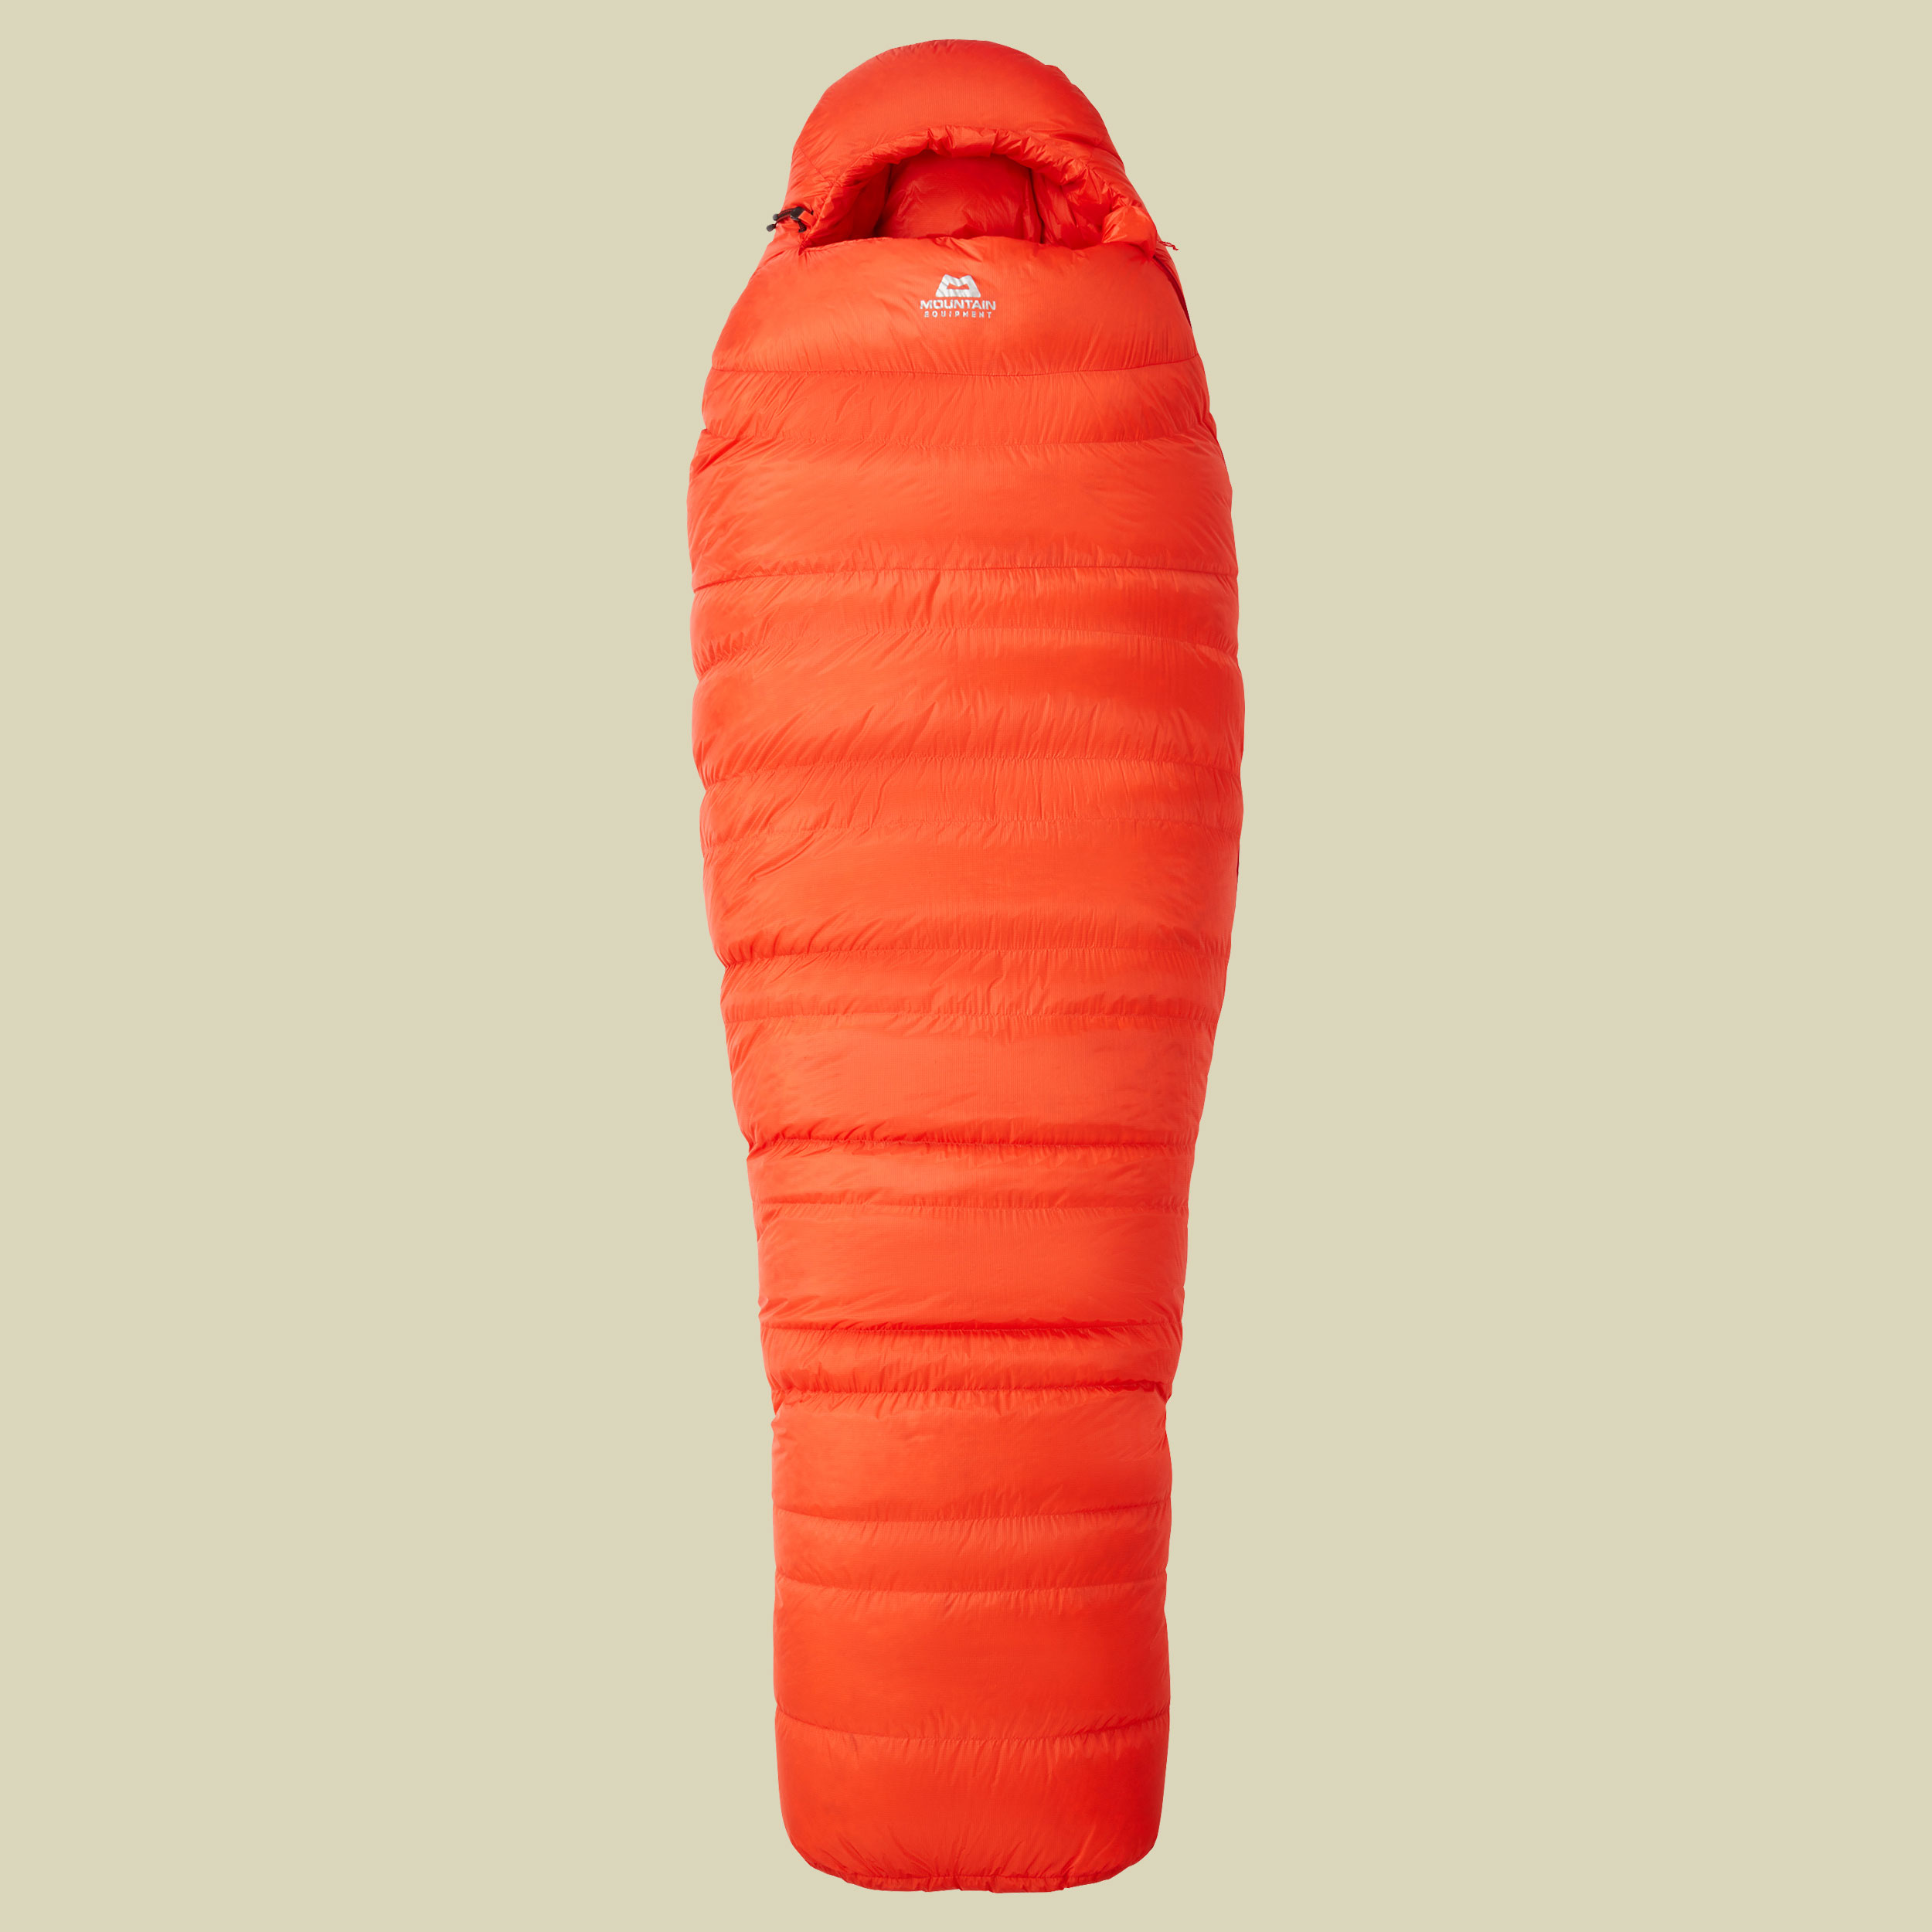 Kryos bis Körpergröße 185 cm Farbe cardinal orange, Reißverschluss links